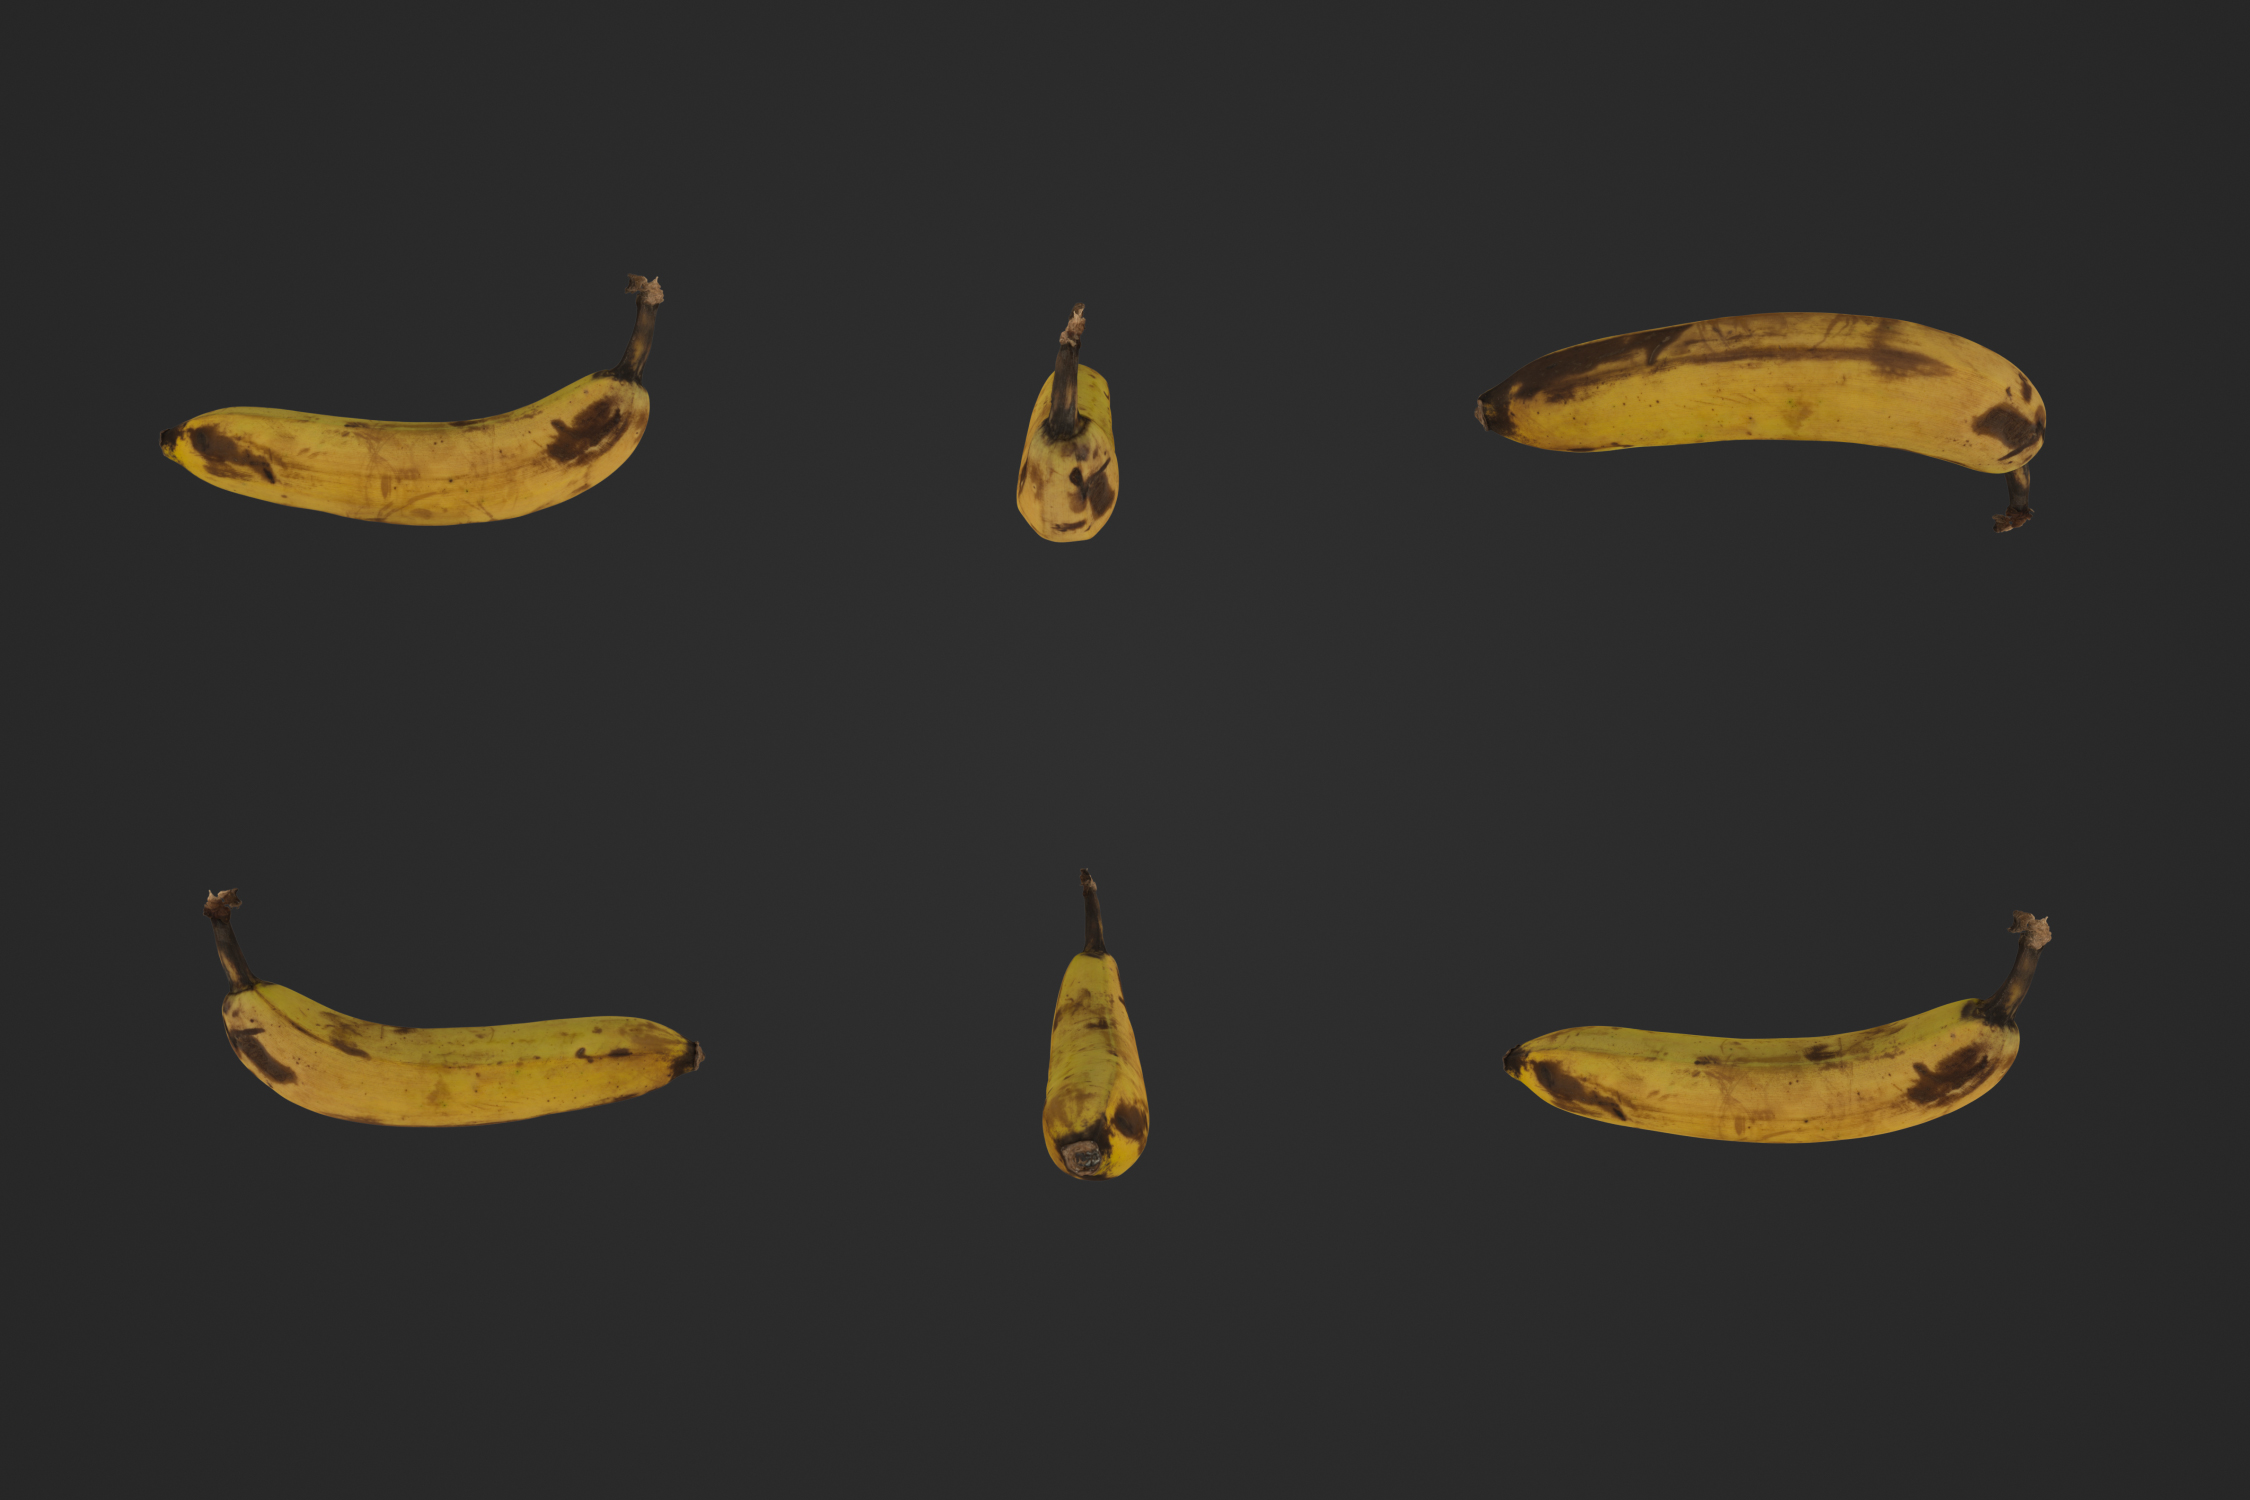 Banana_1_Previews_1.jpg